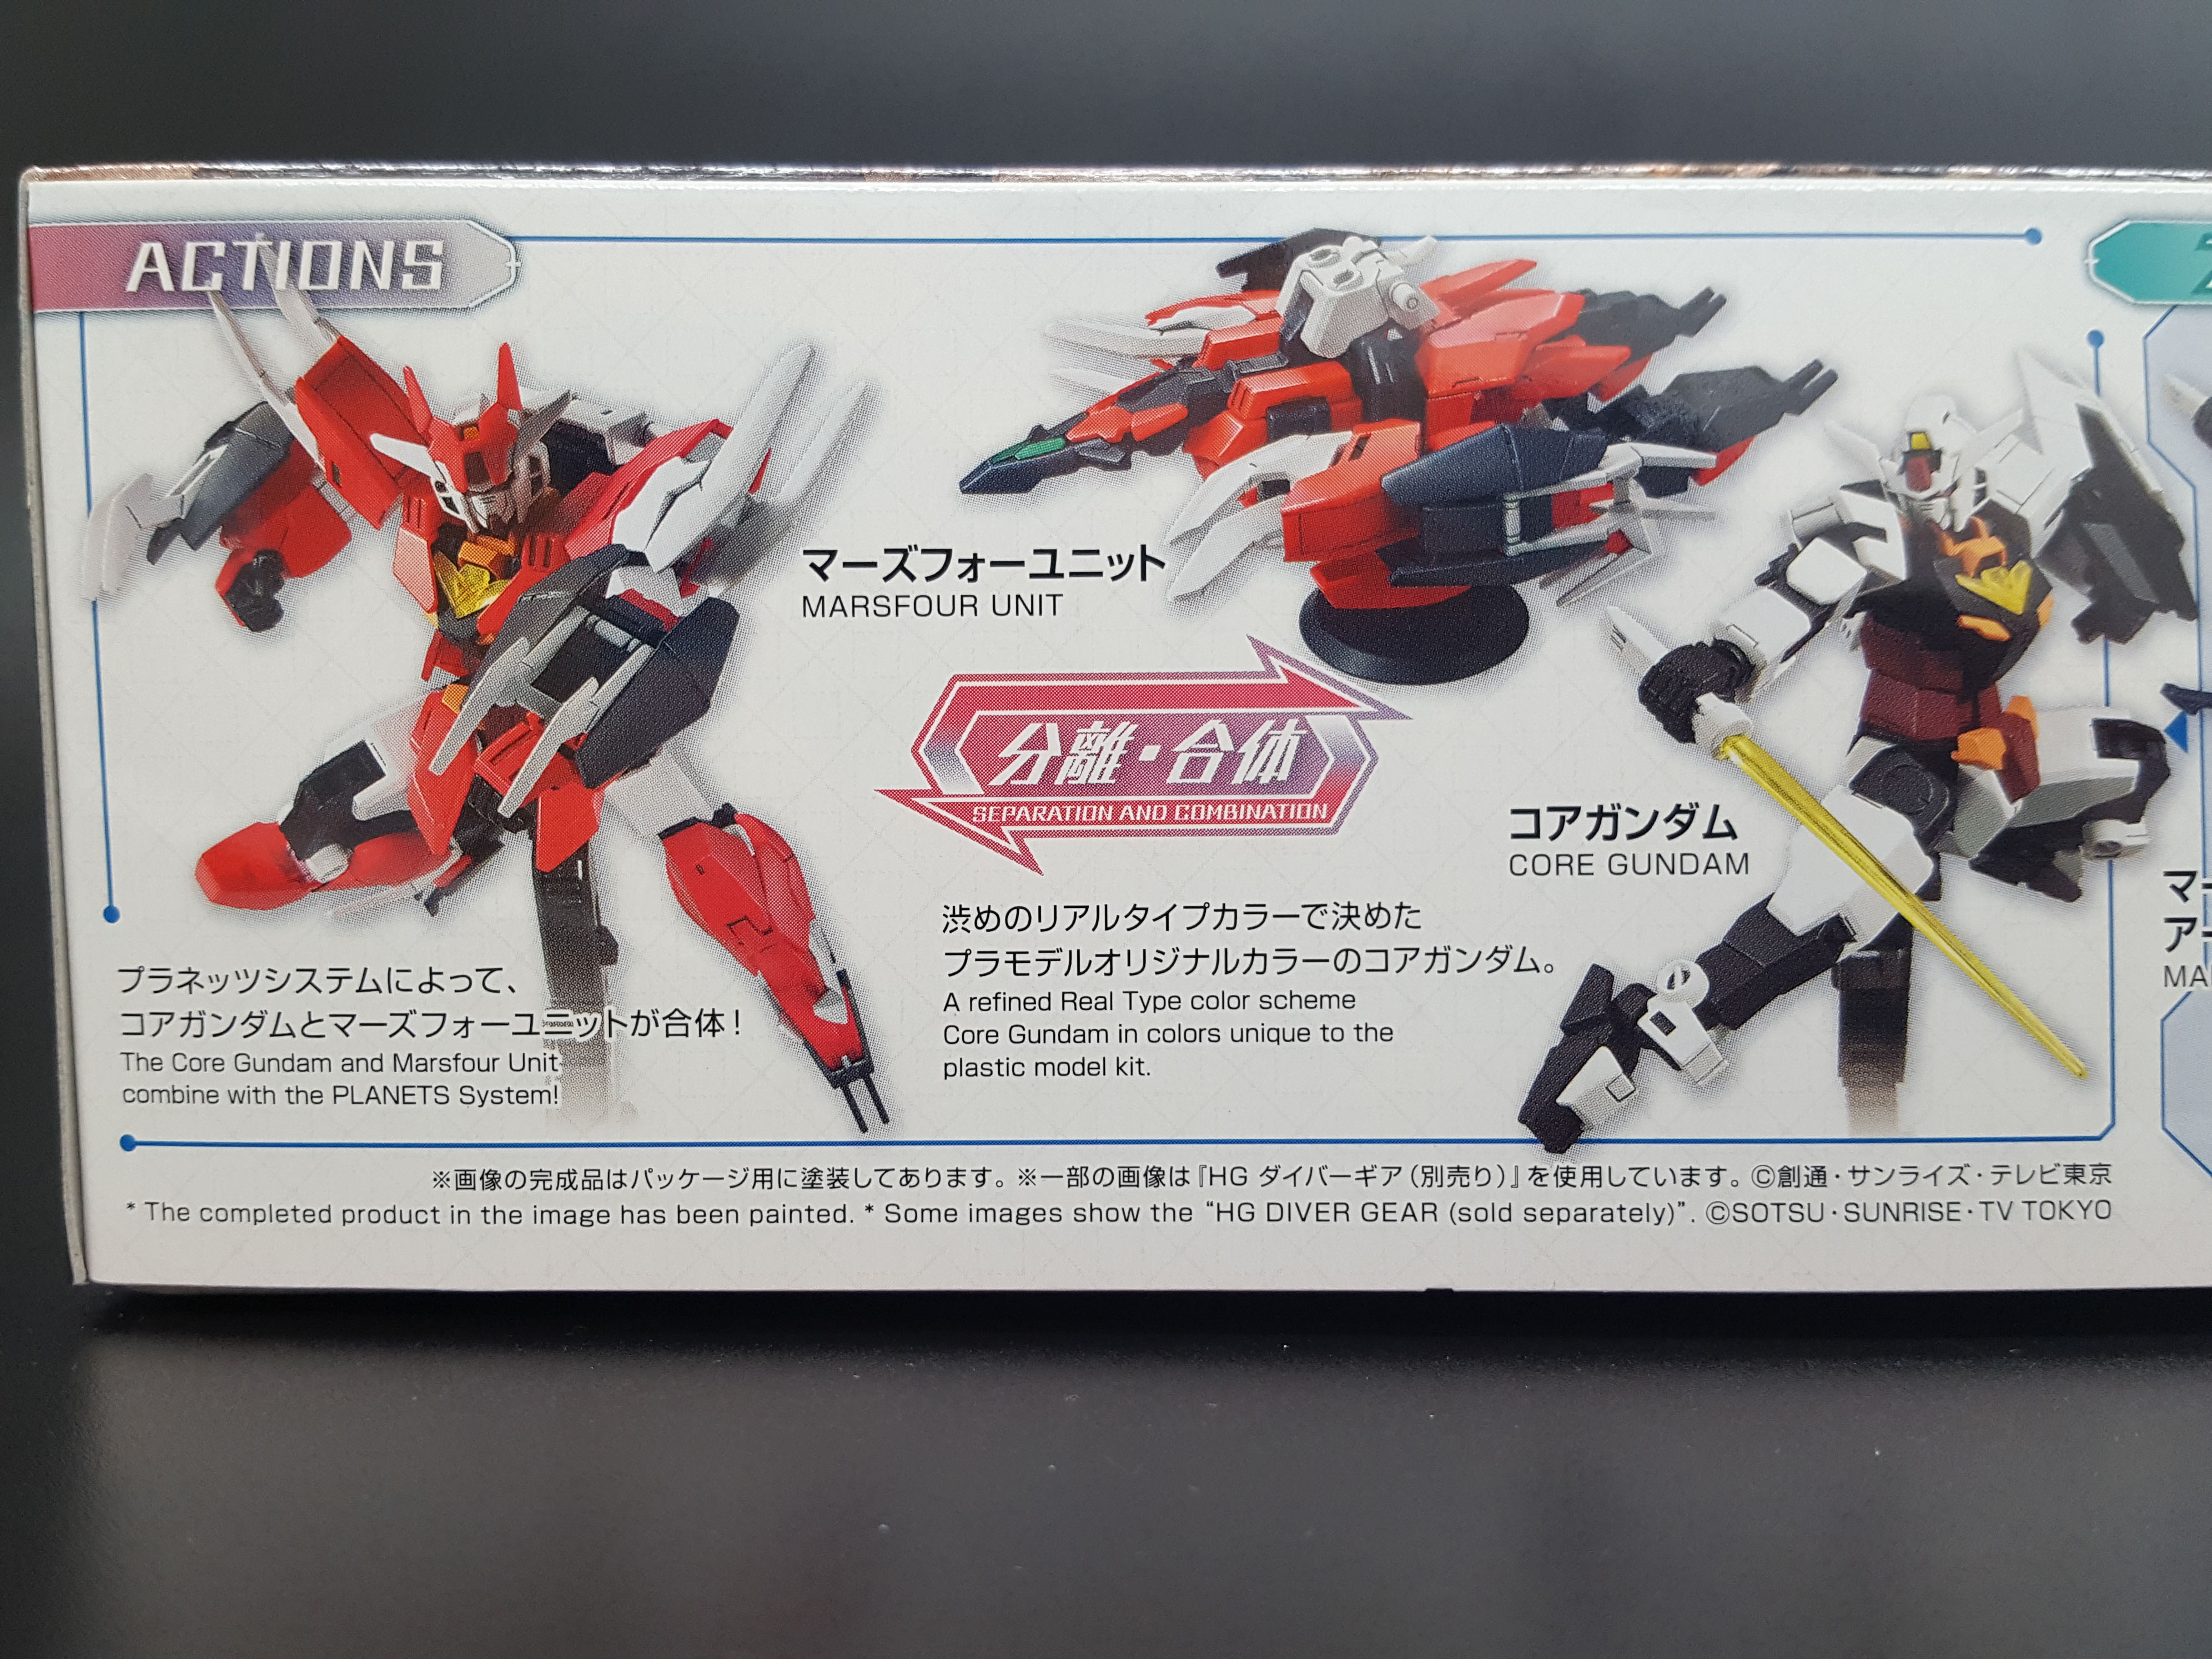 1/144 HDBD:R Core Gundam (Real Type Color) & Marsfour Unit